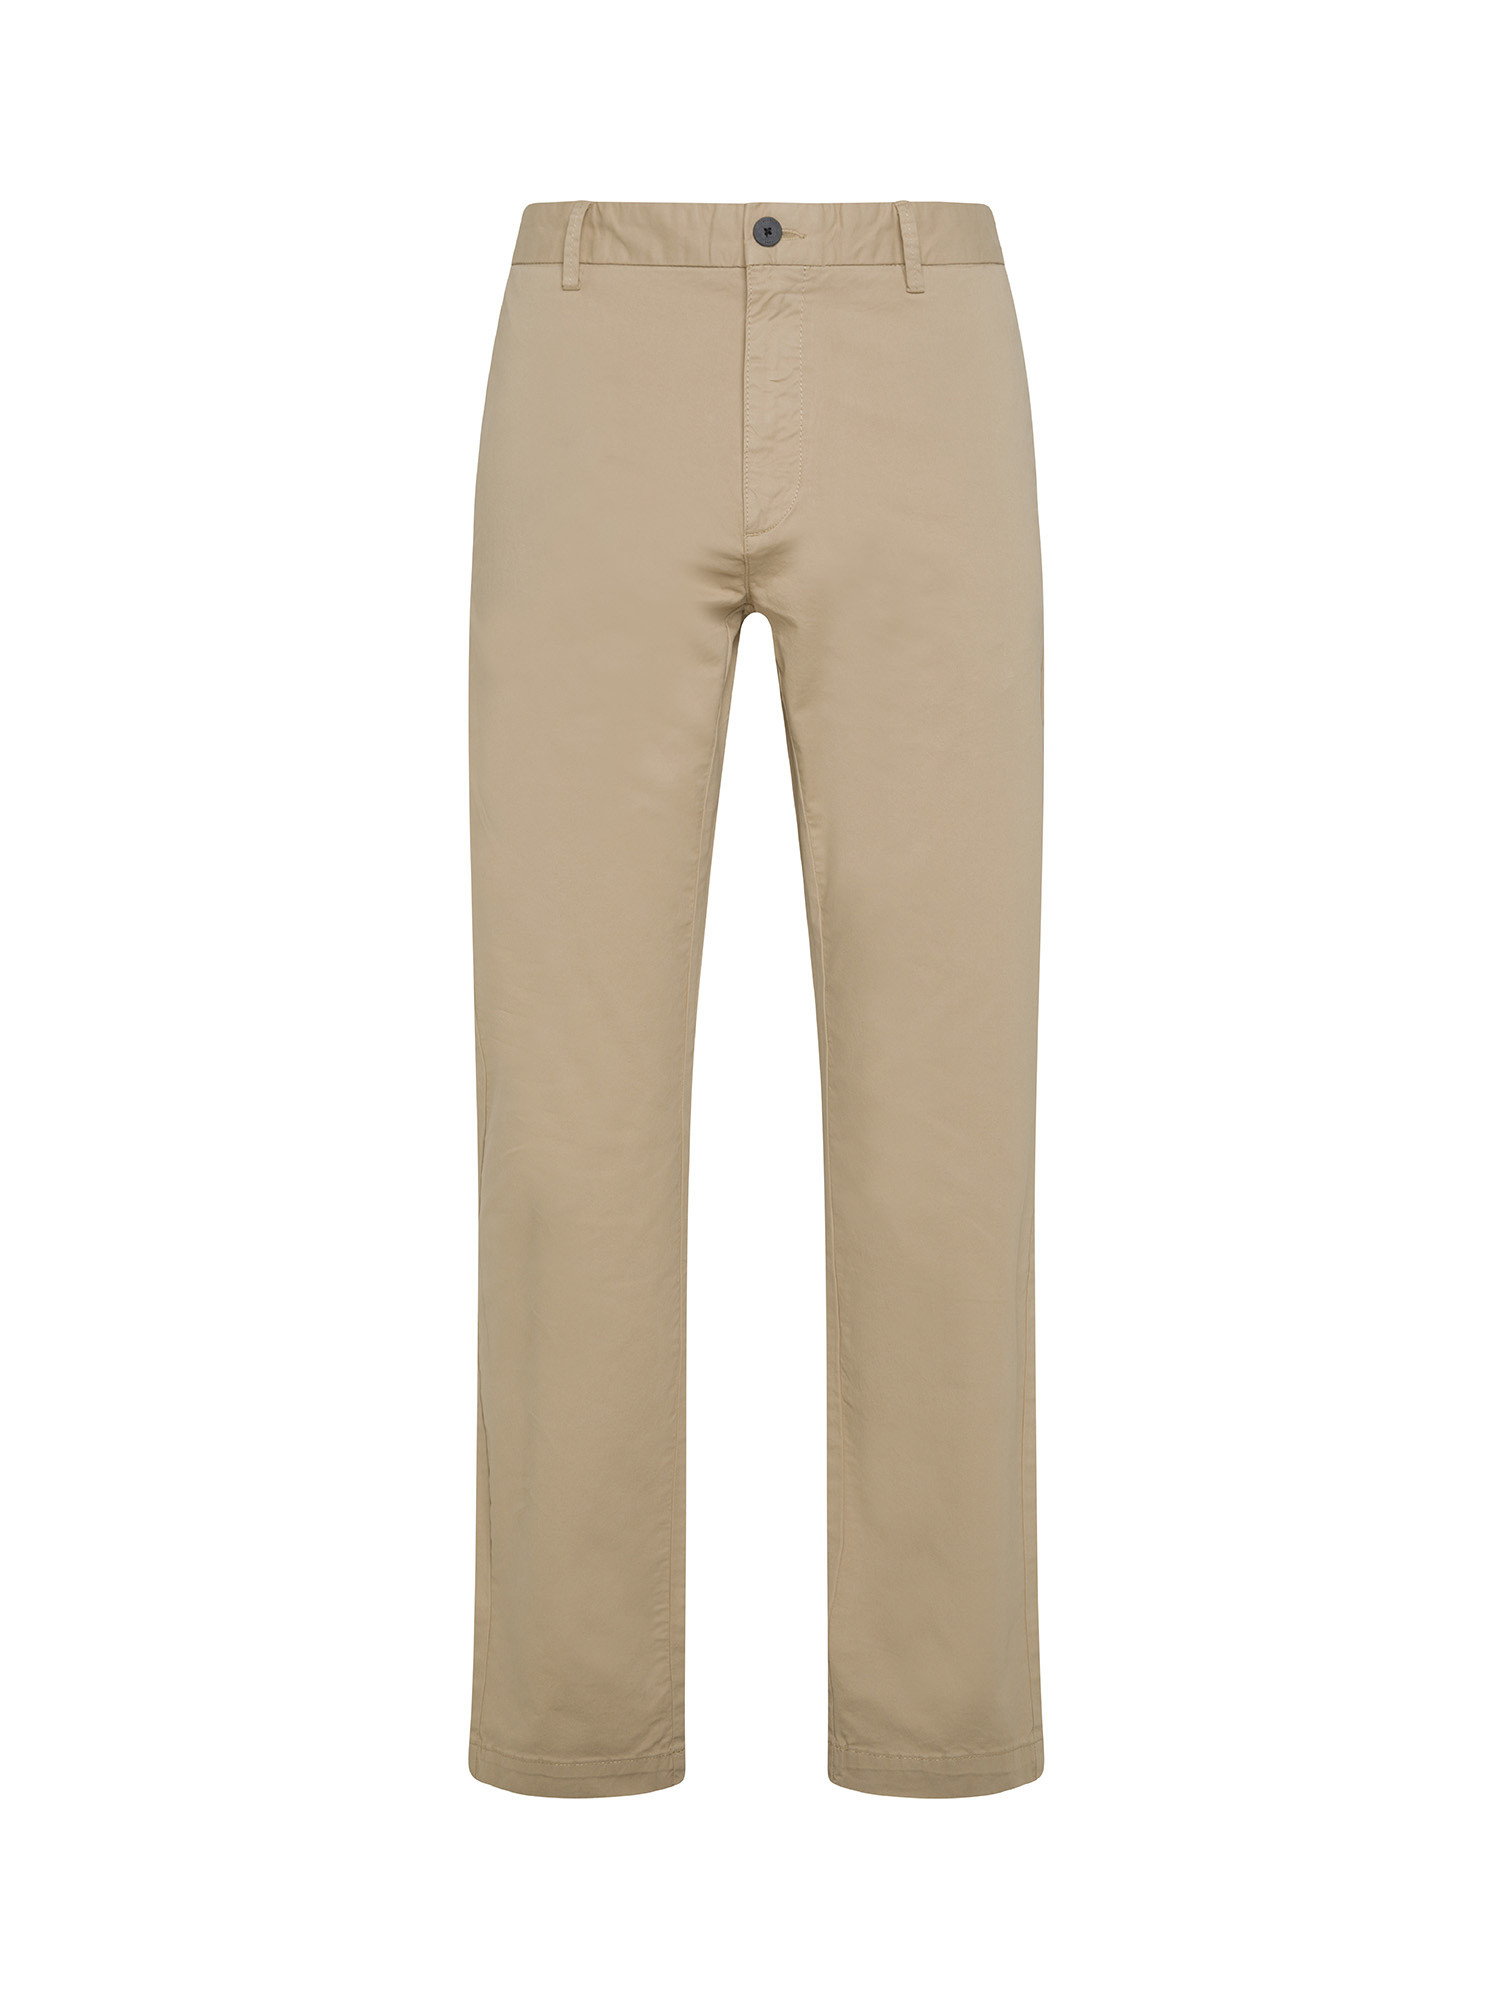 Hugo - Pantaloni chino slim fit, Beige, large image number 0